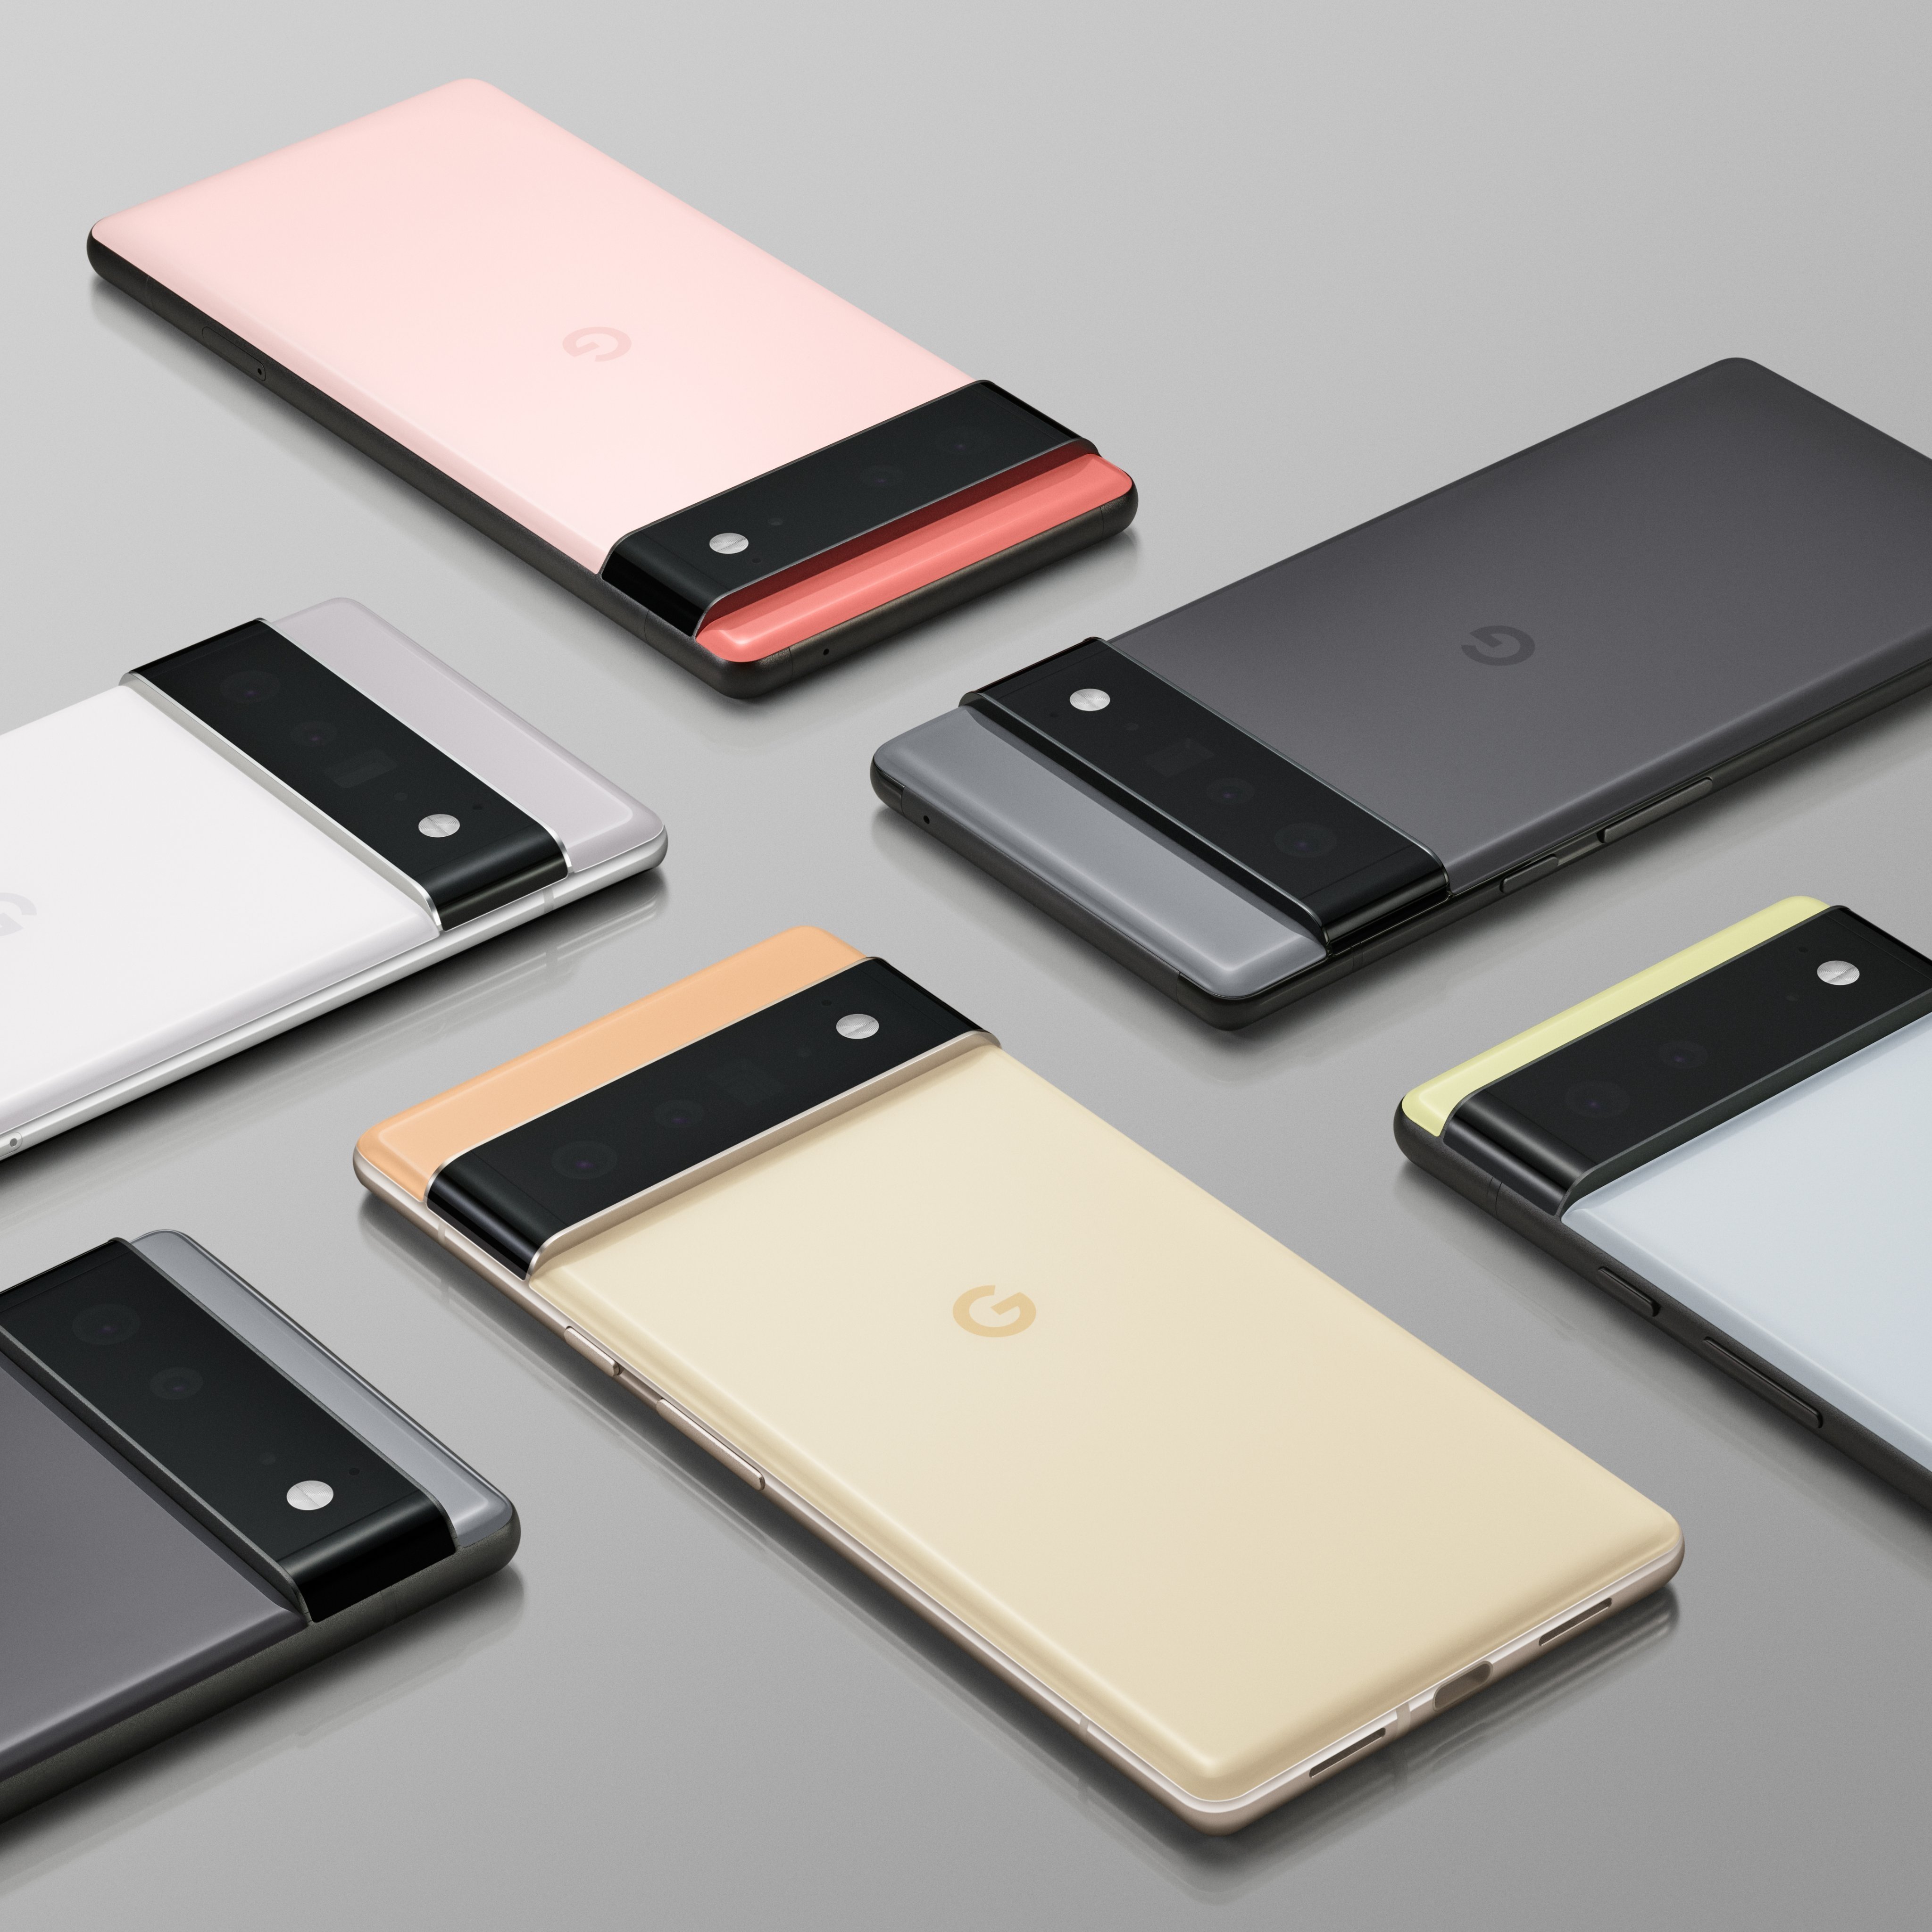 Google Pixel 6 Series Smartphones Reportedly Launching September 13